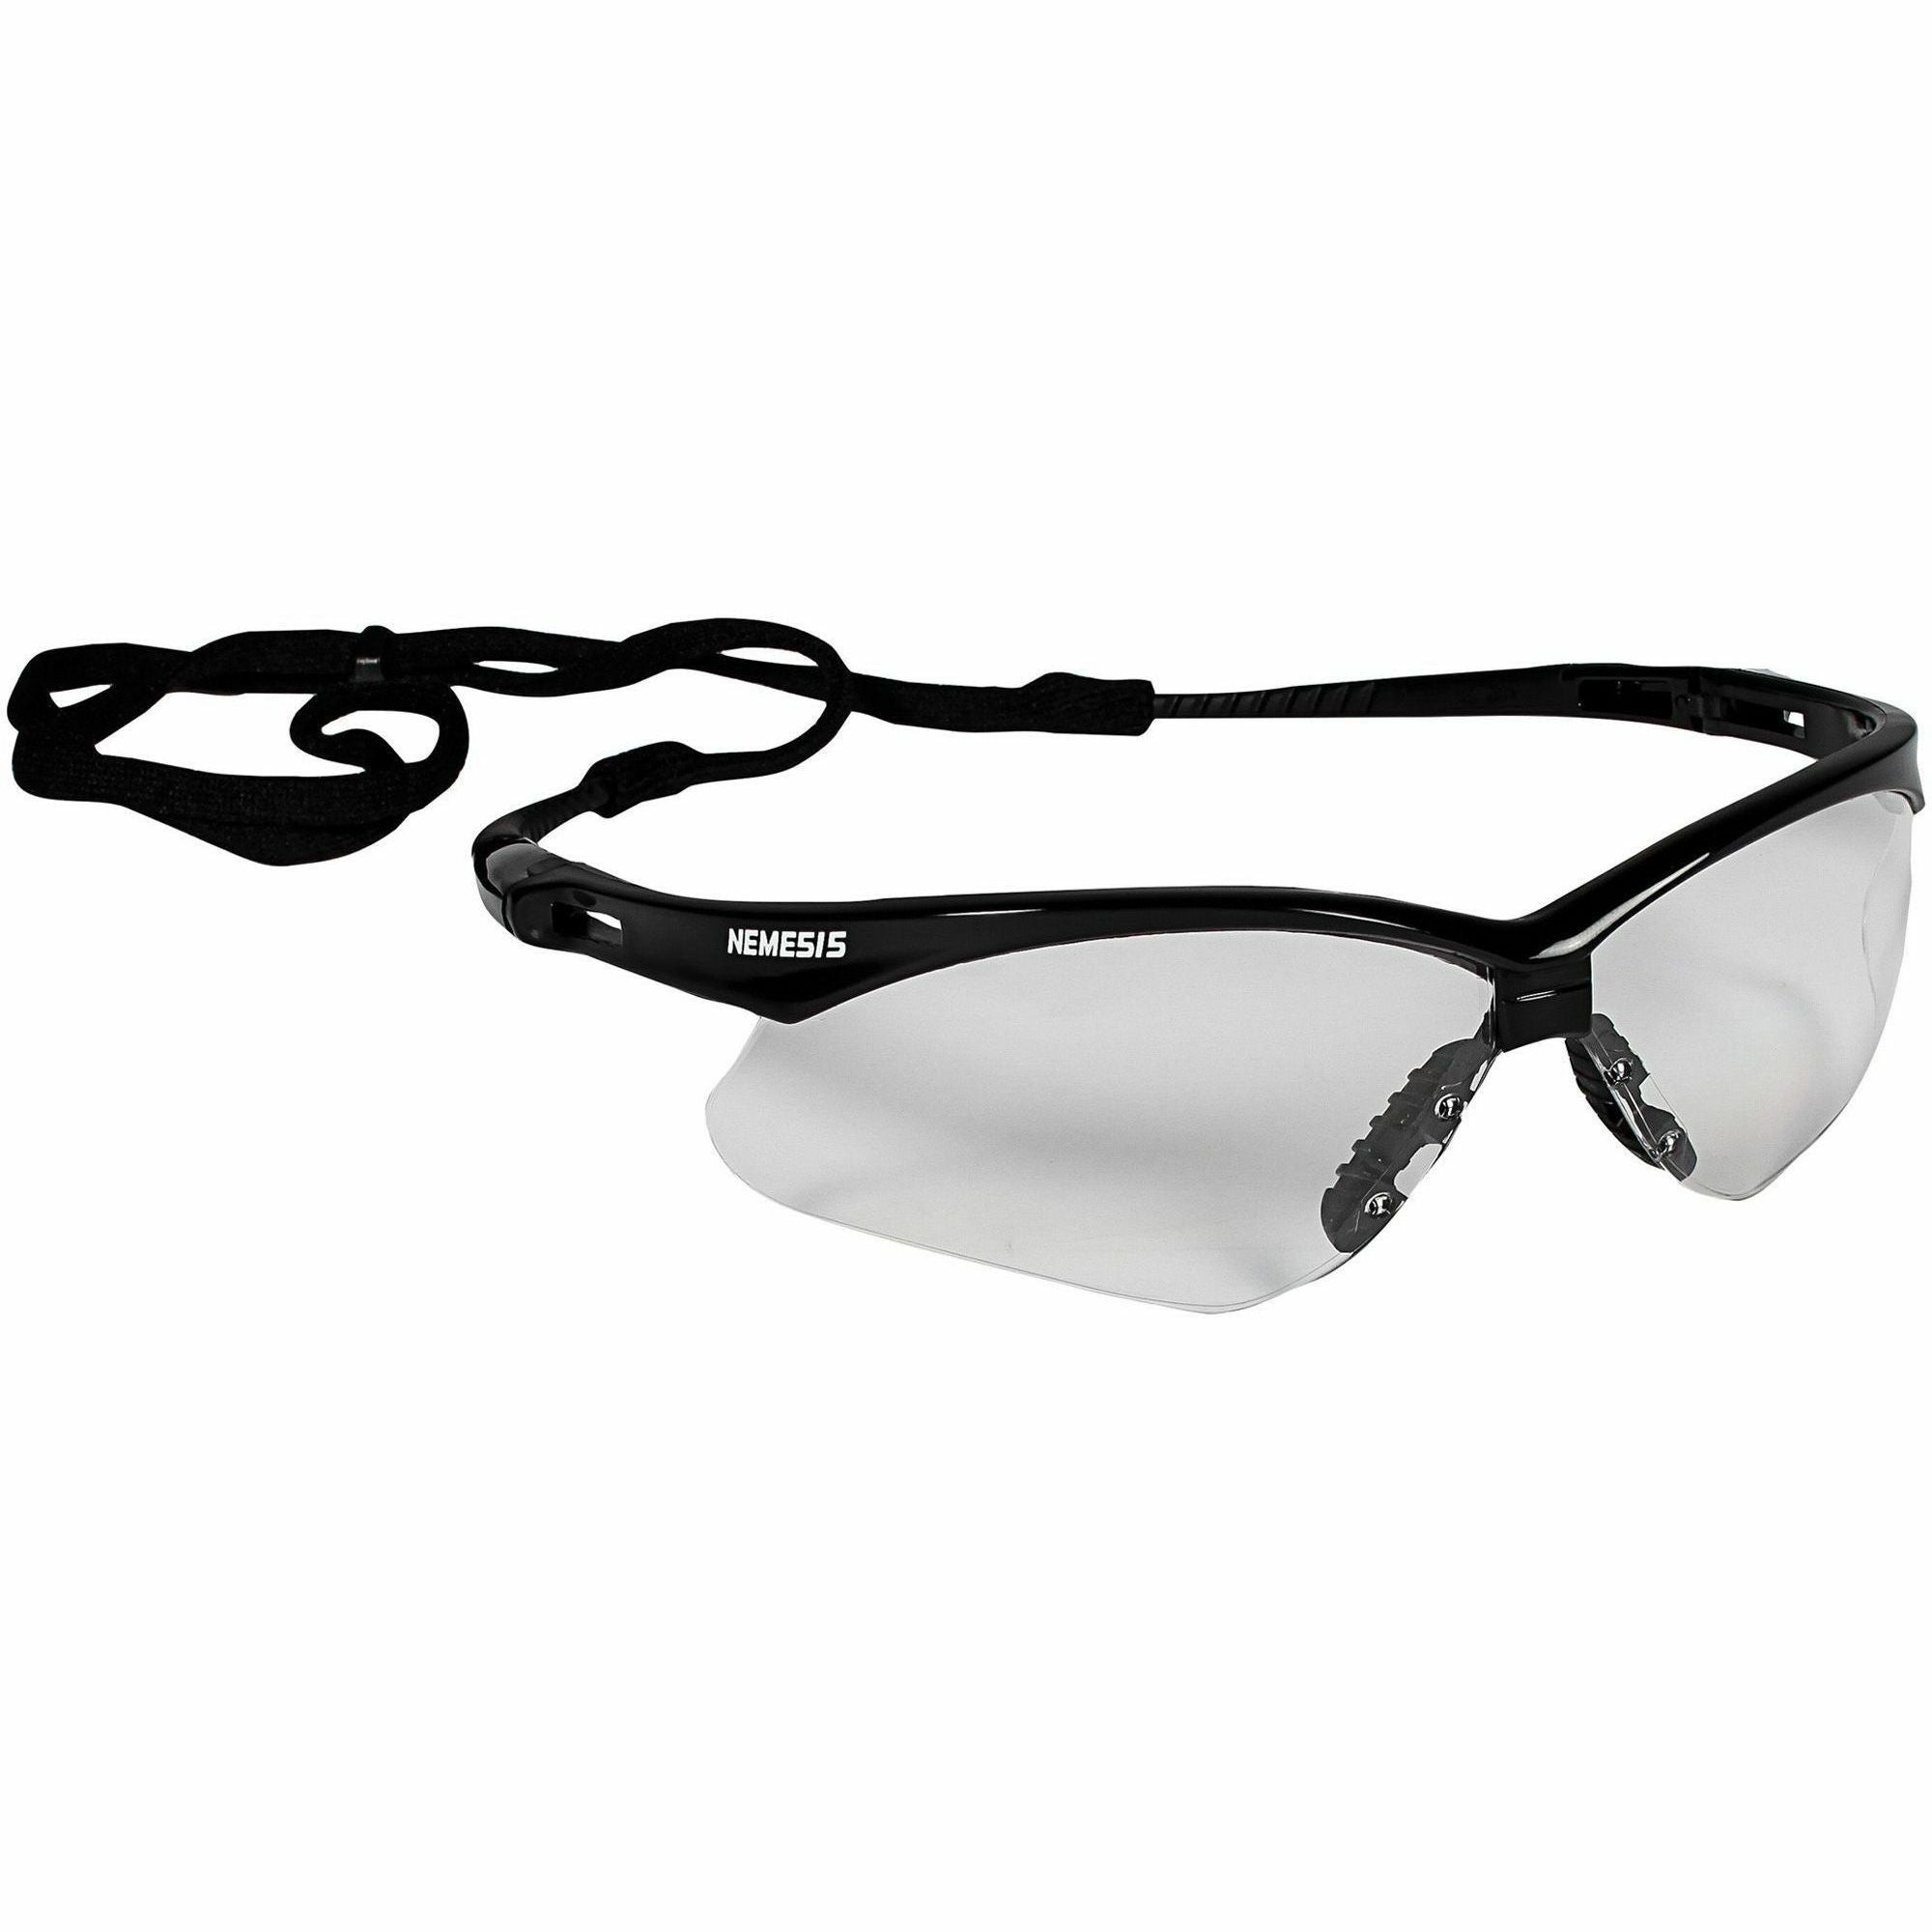 kleenguard-v30-nemesis-safety-eyewear-ultraviolet-protection-clear-lens-black-frame-flexible-lightweight-comfortable-scratch-resistant-12-carton_kcc25676ct - 1